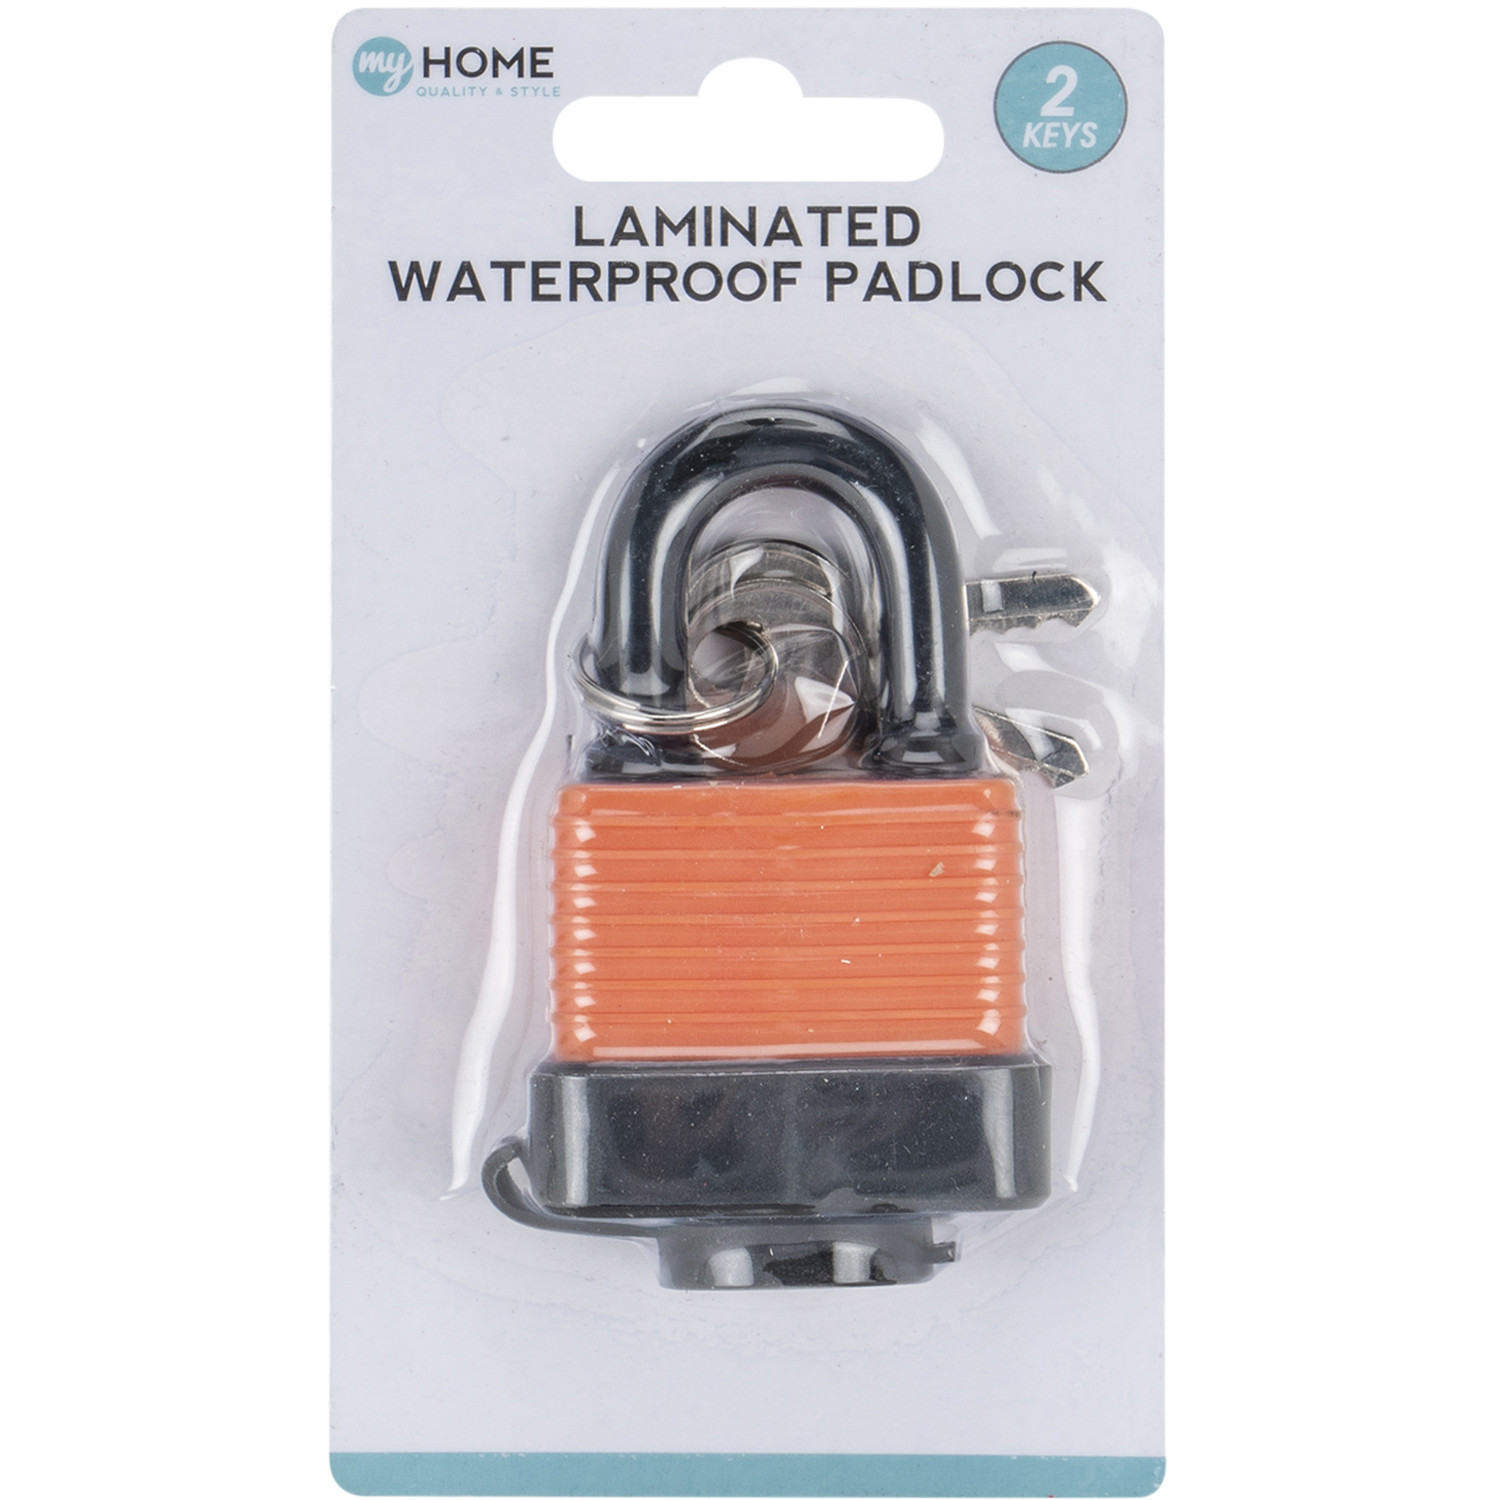 My Home 82mm Medium Shackle Laminated Waterproof Padlock with 2 Keys Image